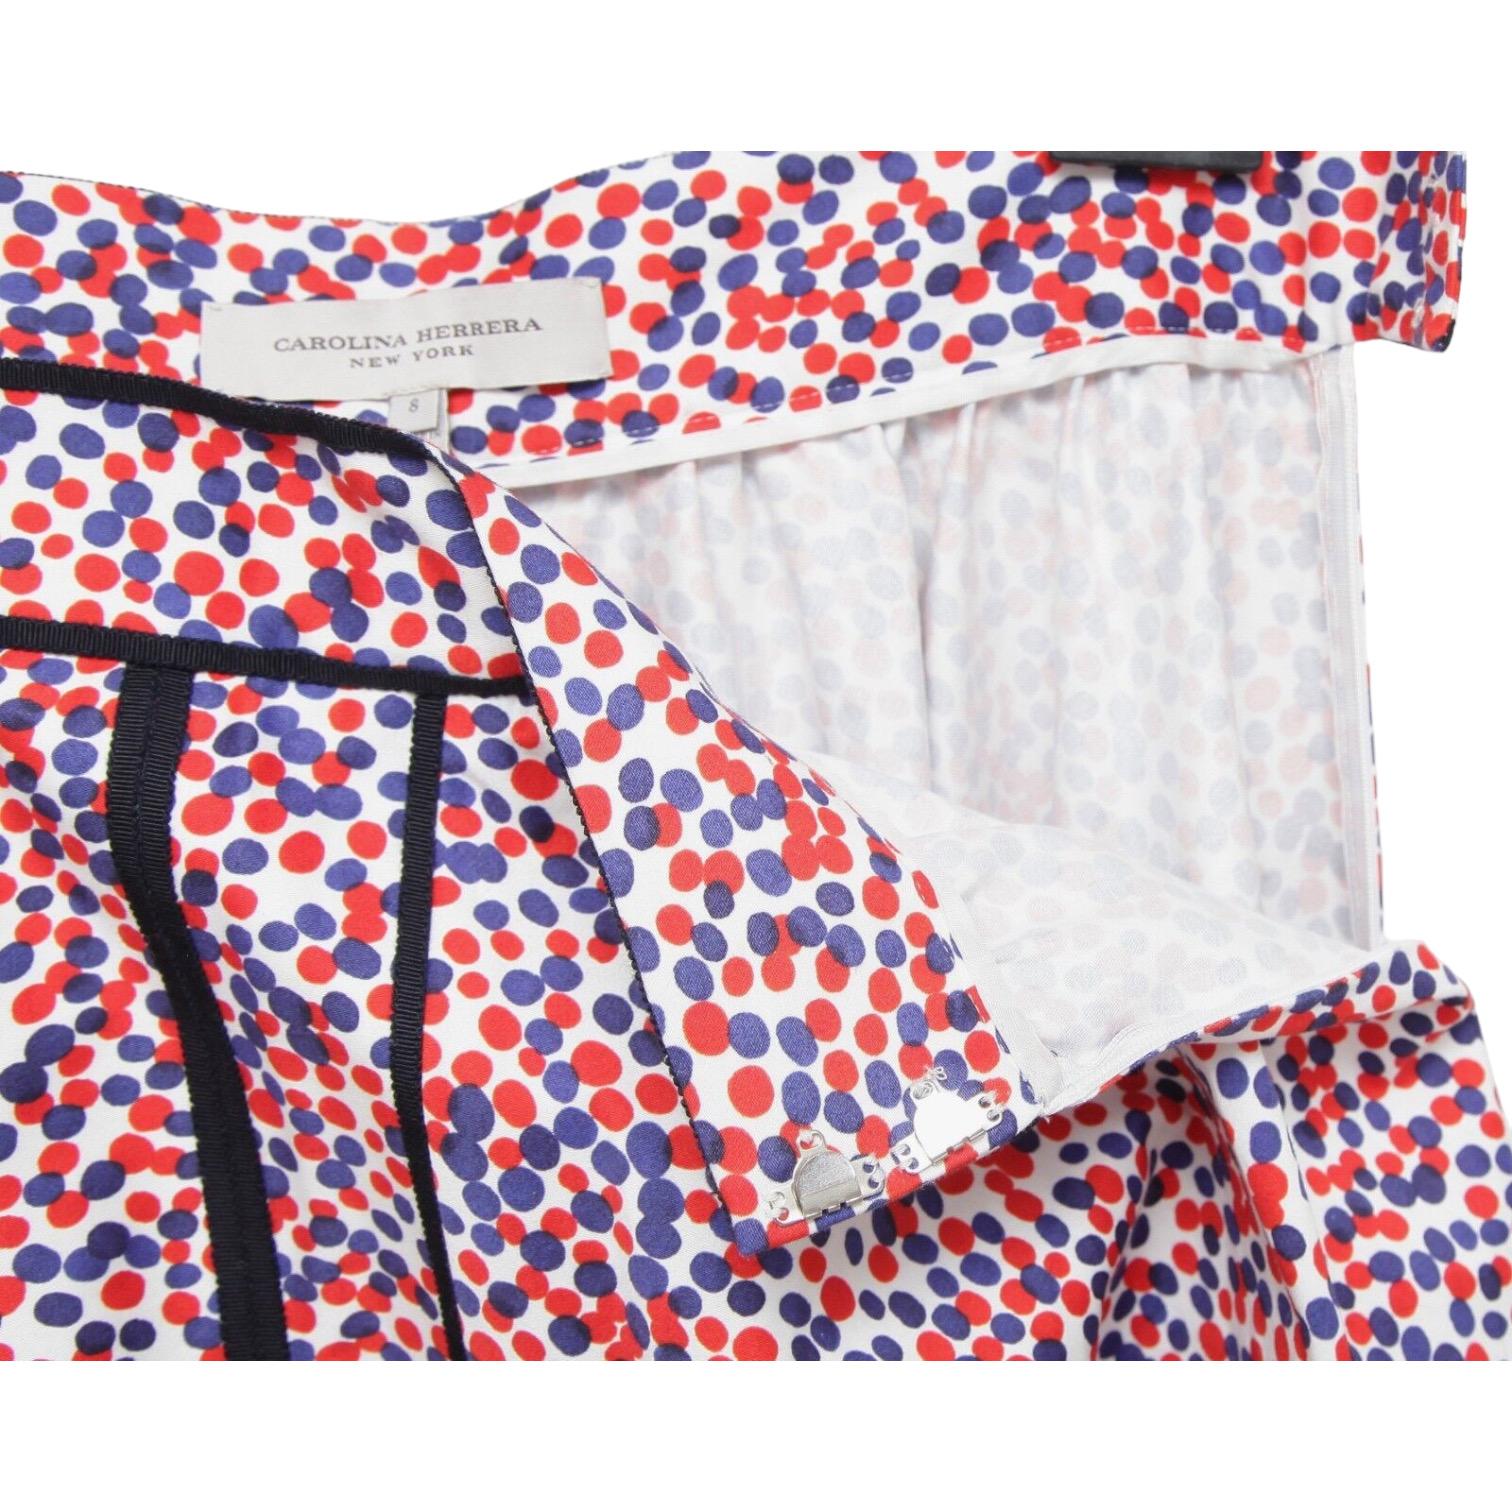 CAROLINA HERRERA Skirt Umbrella Polka Dot Full Maxi Cotton Blend Dress Sz 8 For Sale 3